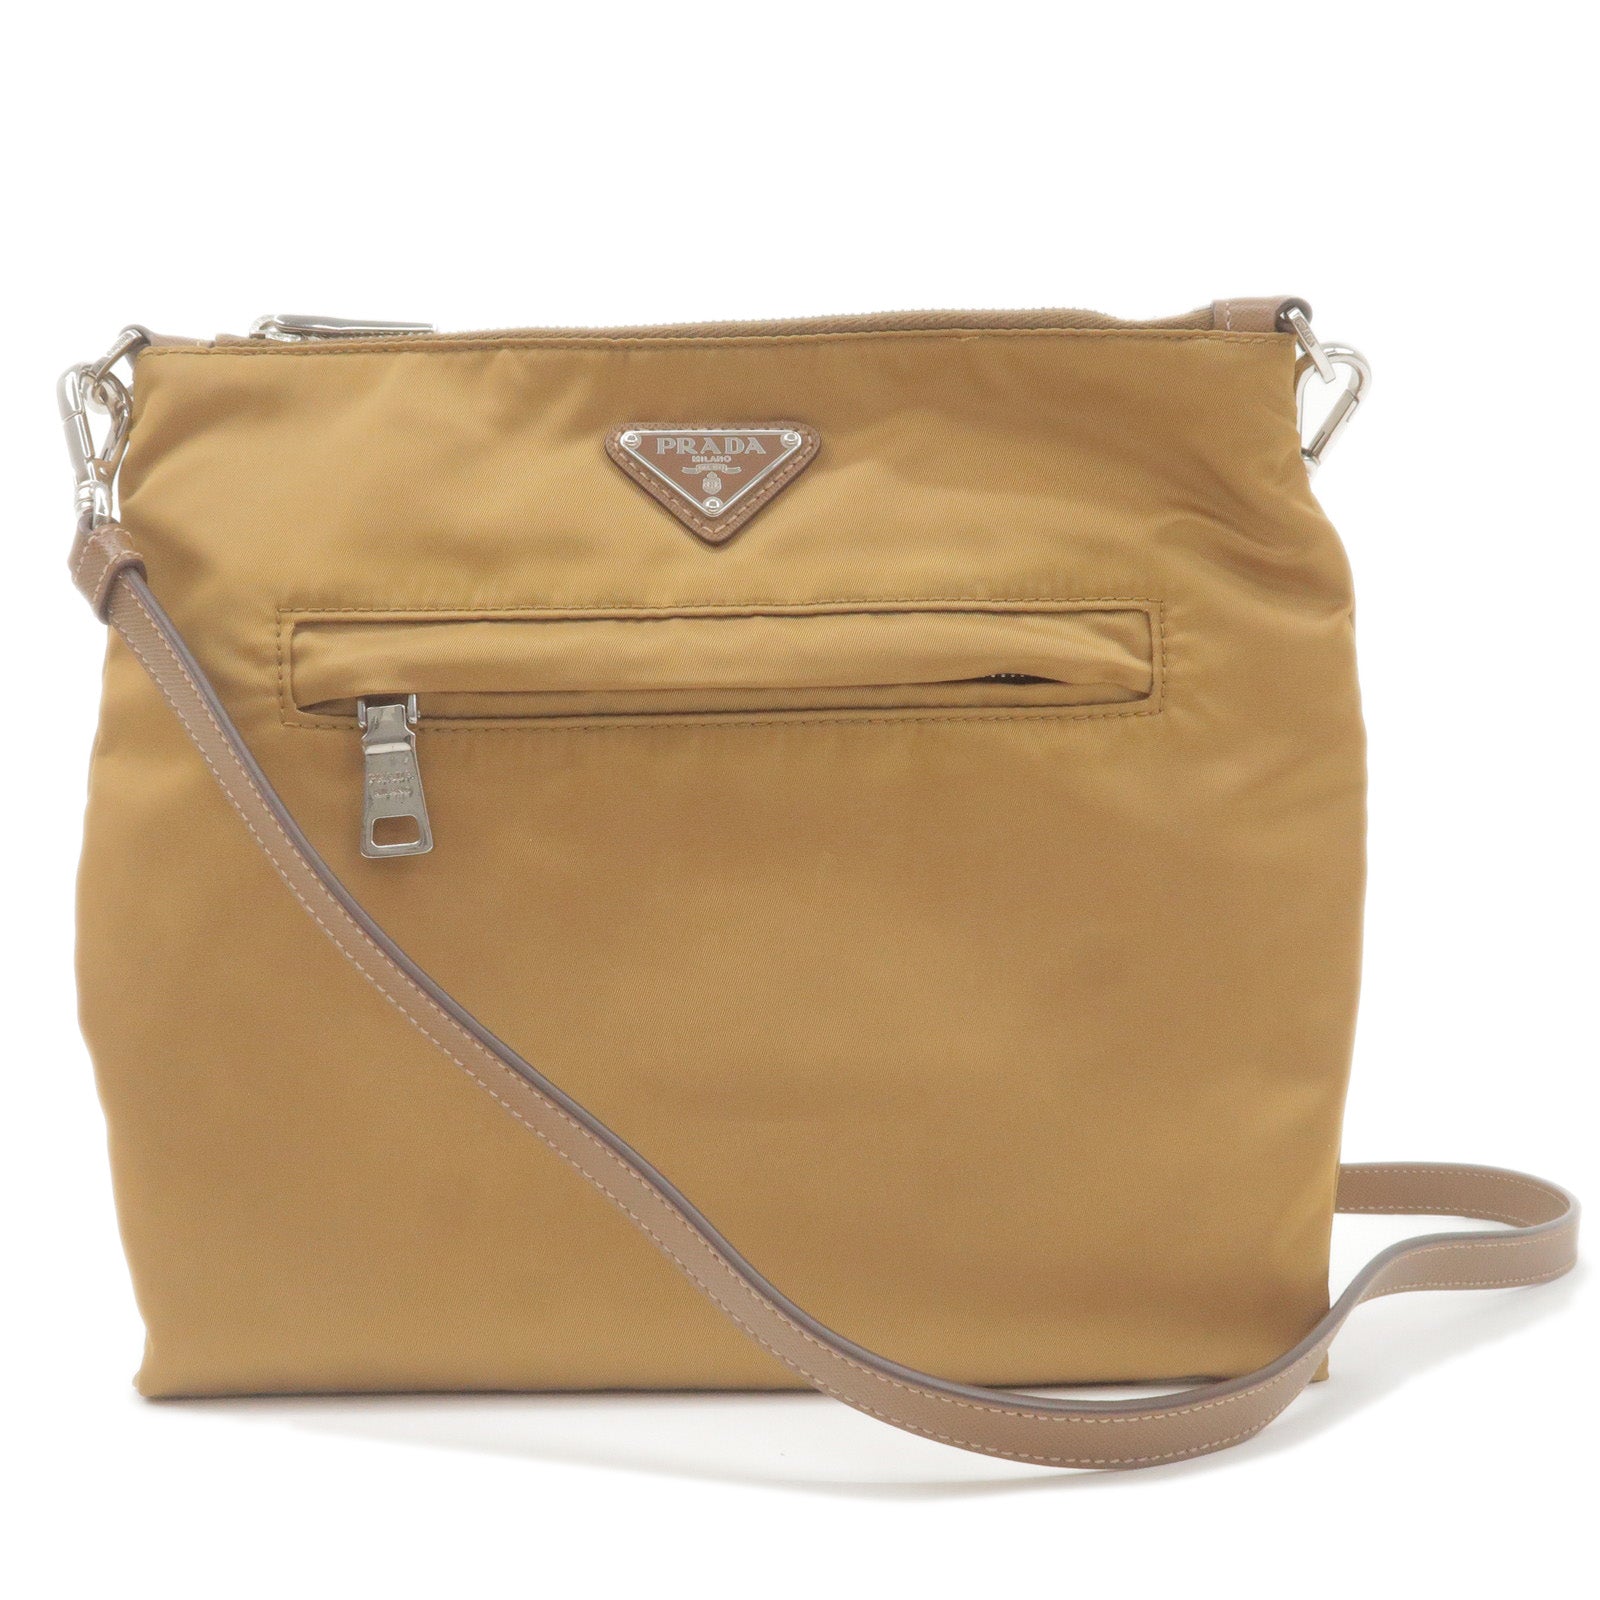 PRADA-Logo-Nylon-Leather-Shoulder-Bag-Crossbody-Bag-Brown